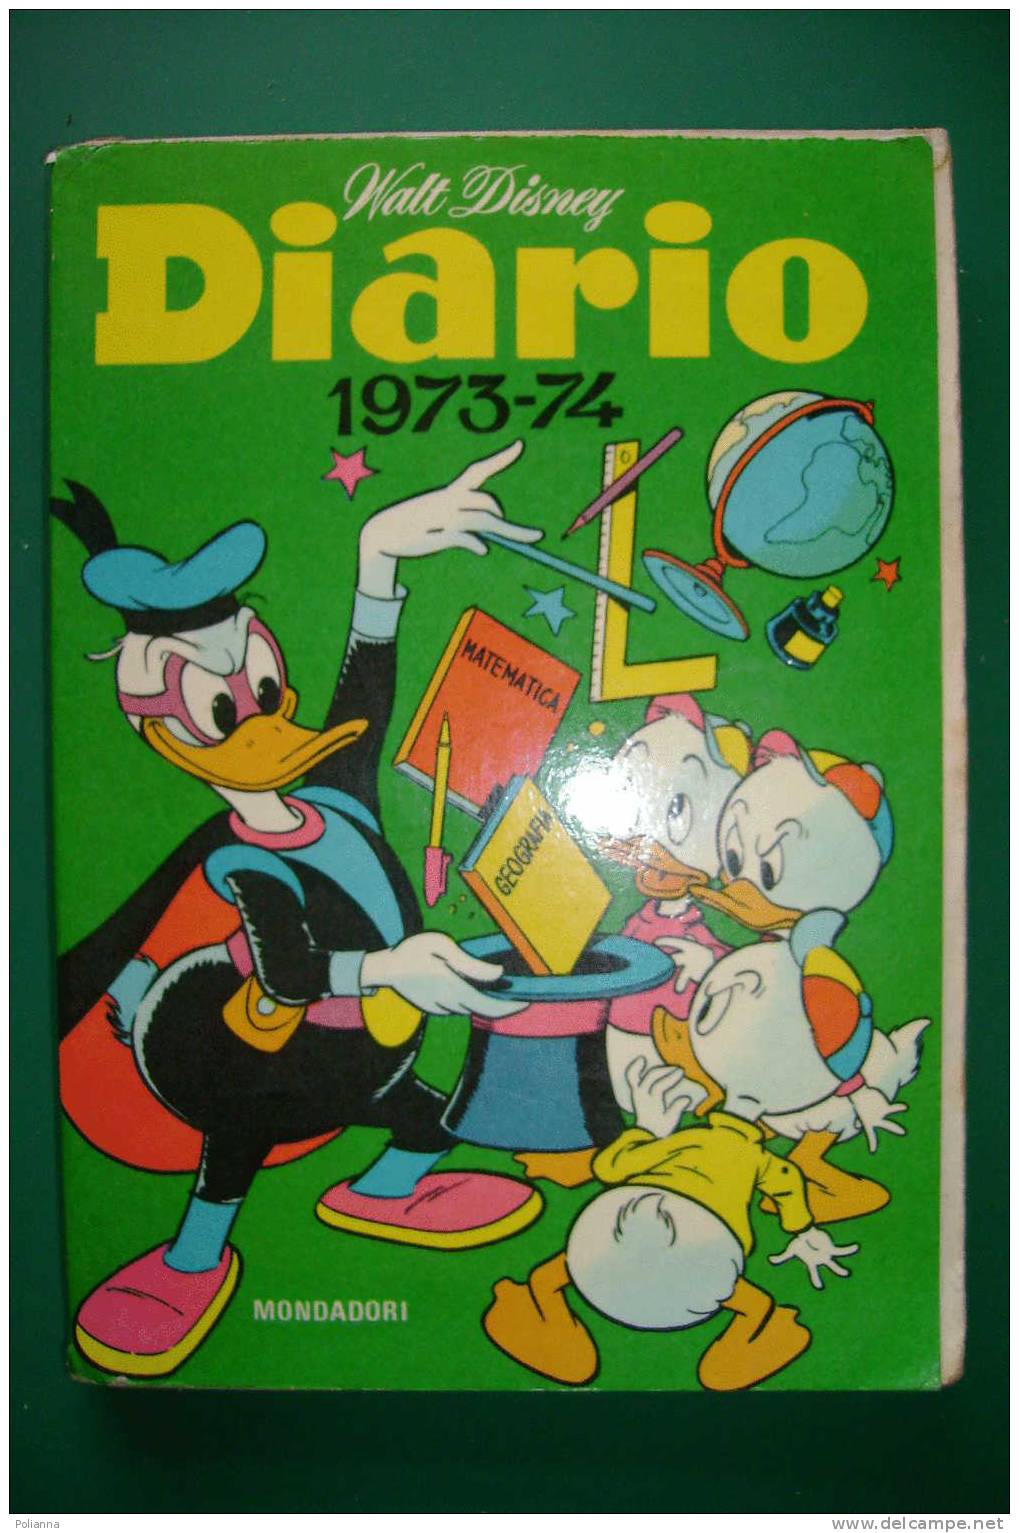 PDK/32 DIARIO SCUOLA Mondadori 1973-74 PAPERINIK WALT DISNEY - Disney